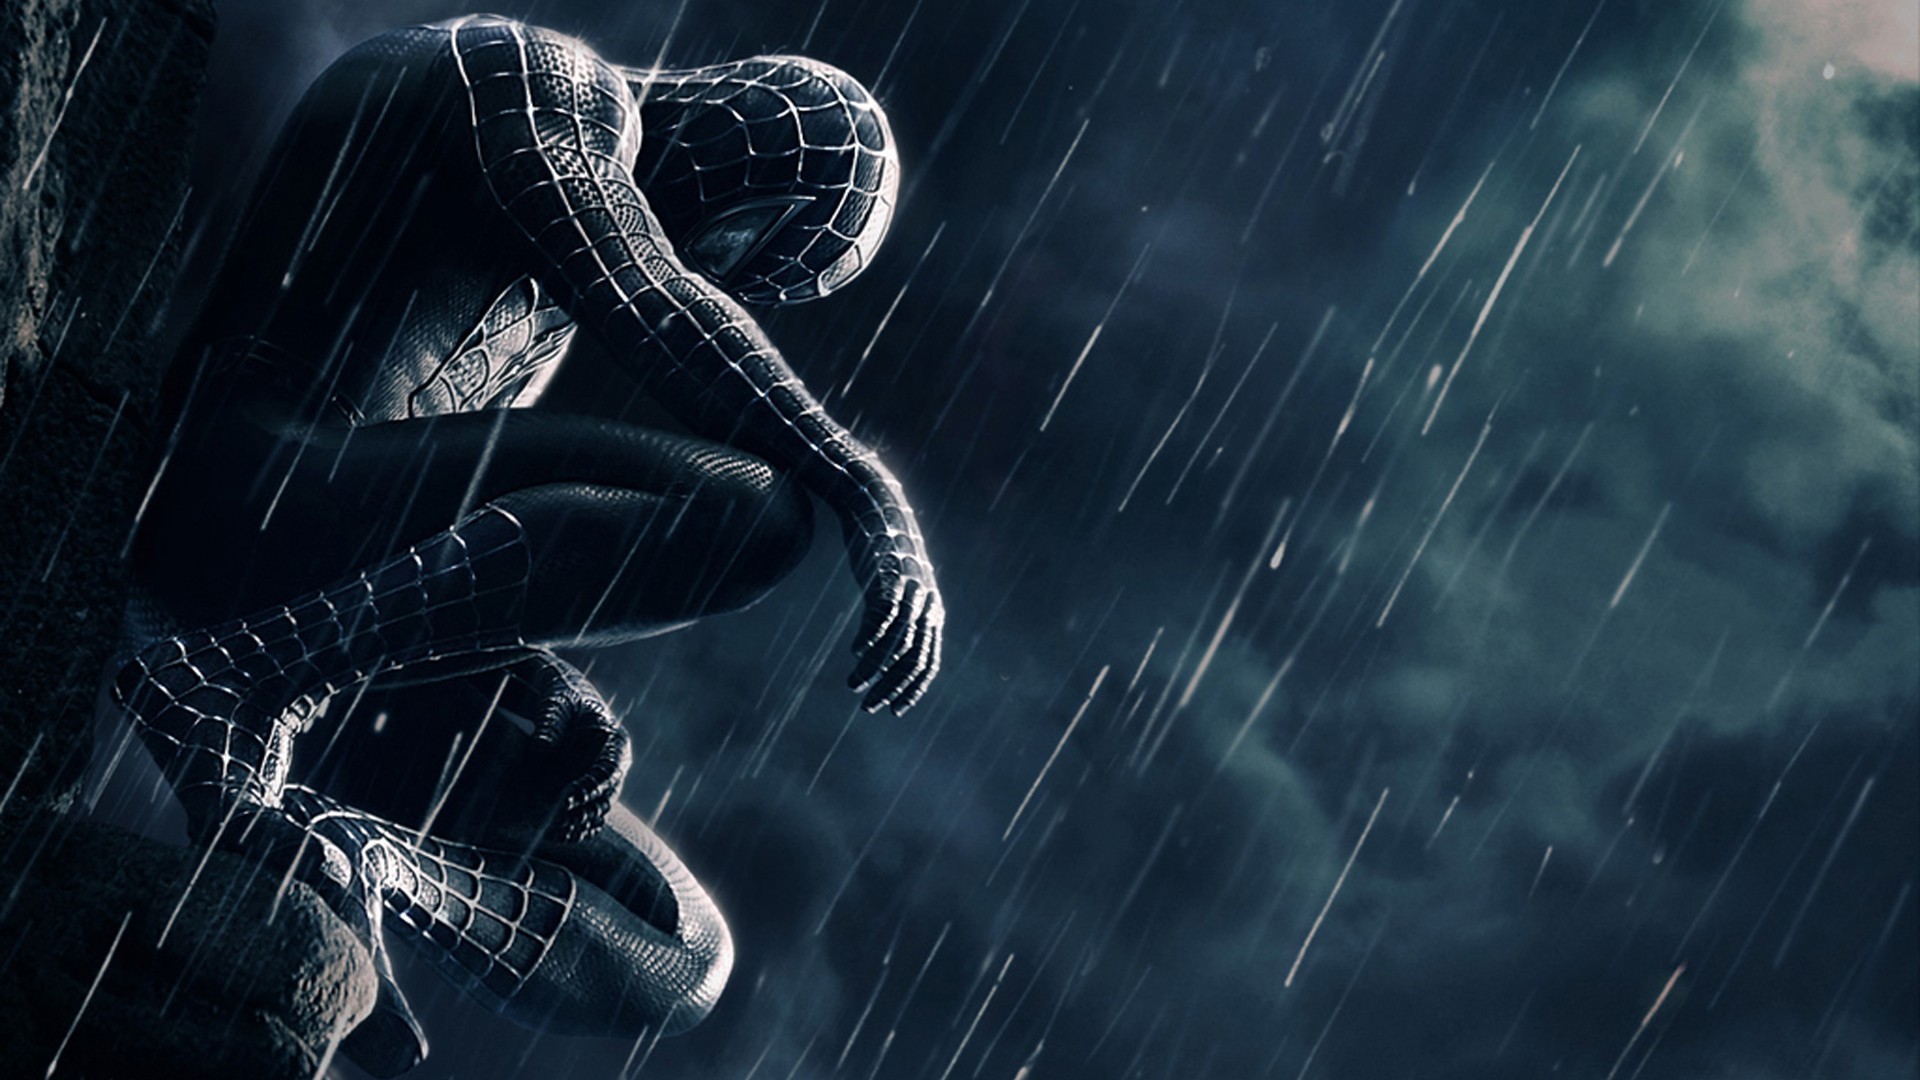 HD The Amazing Spiderman Movie Wallpaper HD 1080p – HiReWallpapers